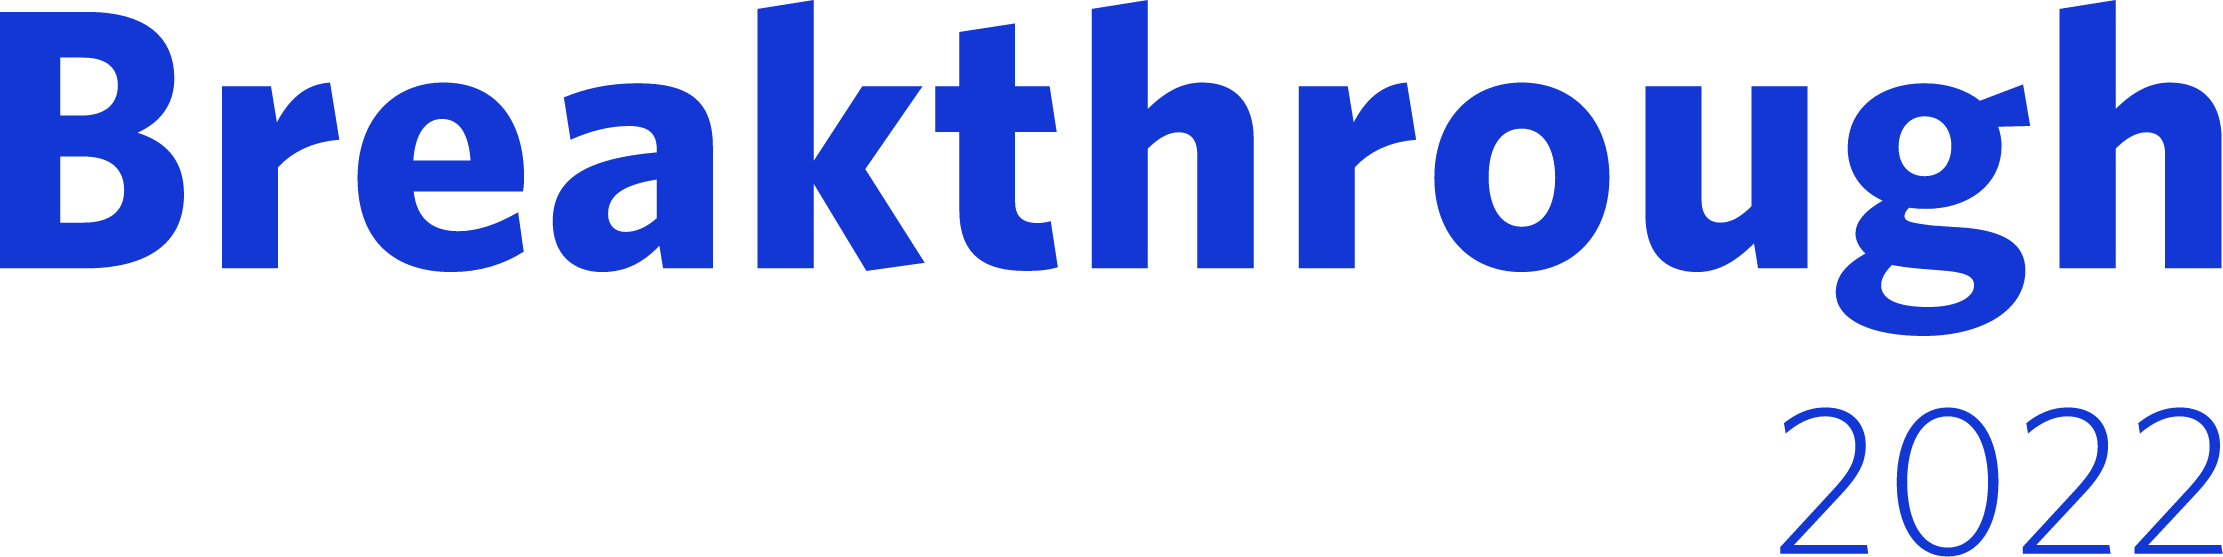 Breakthrough 2022 logo